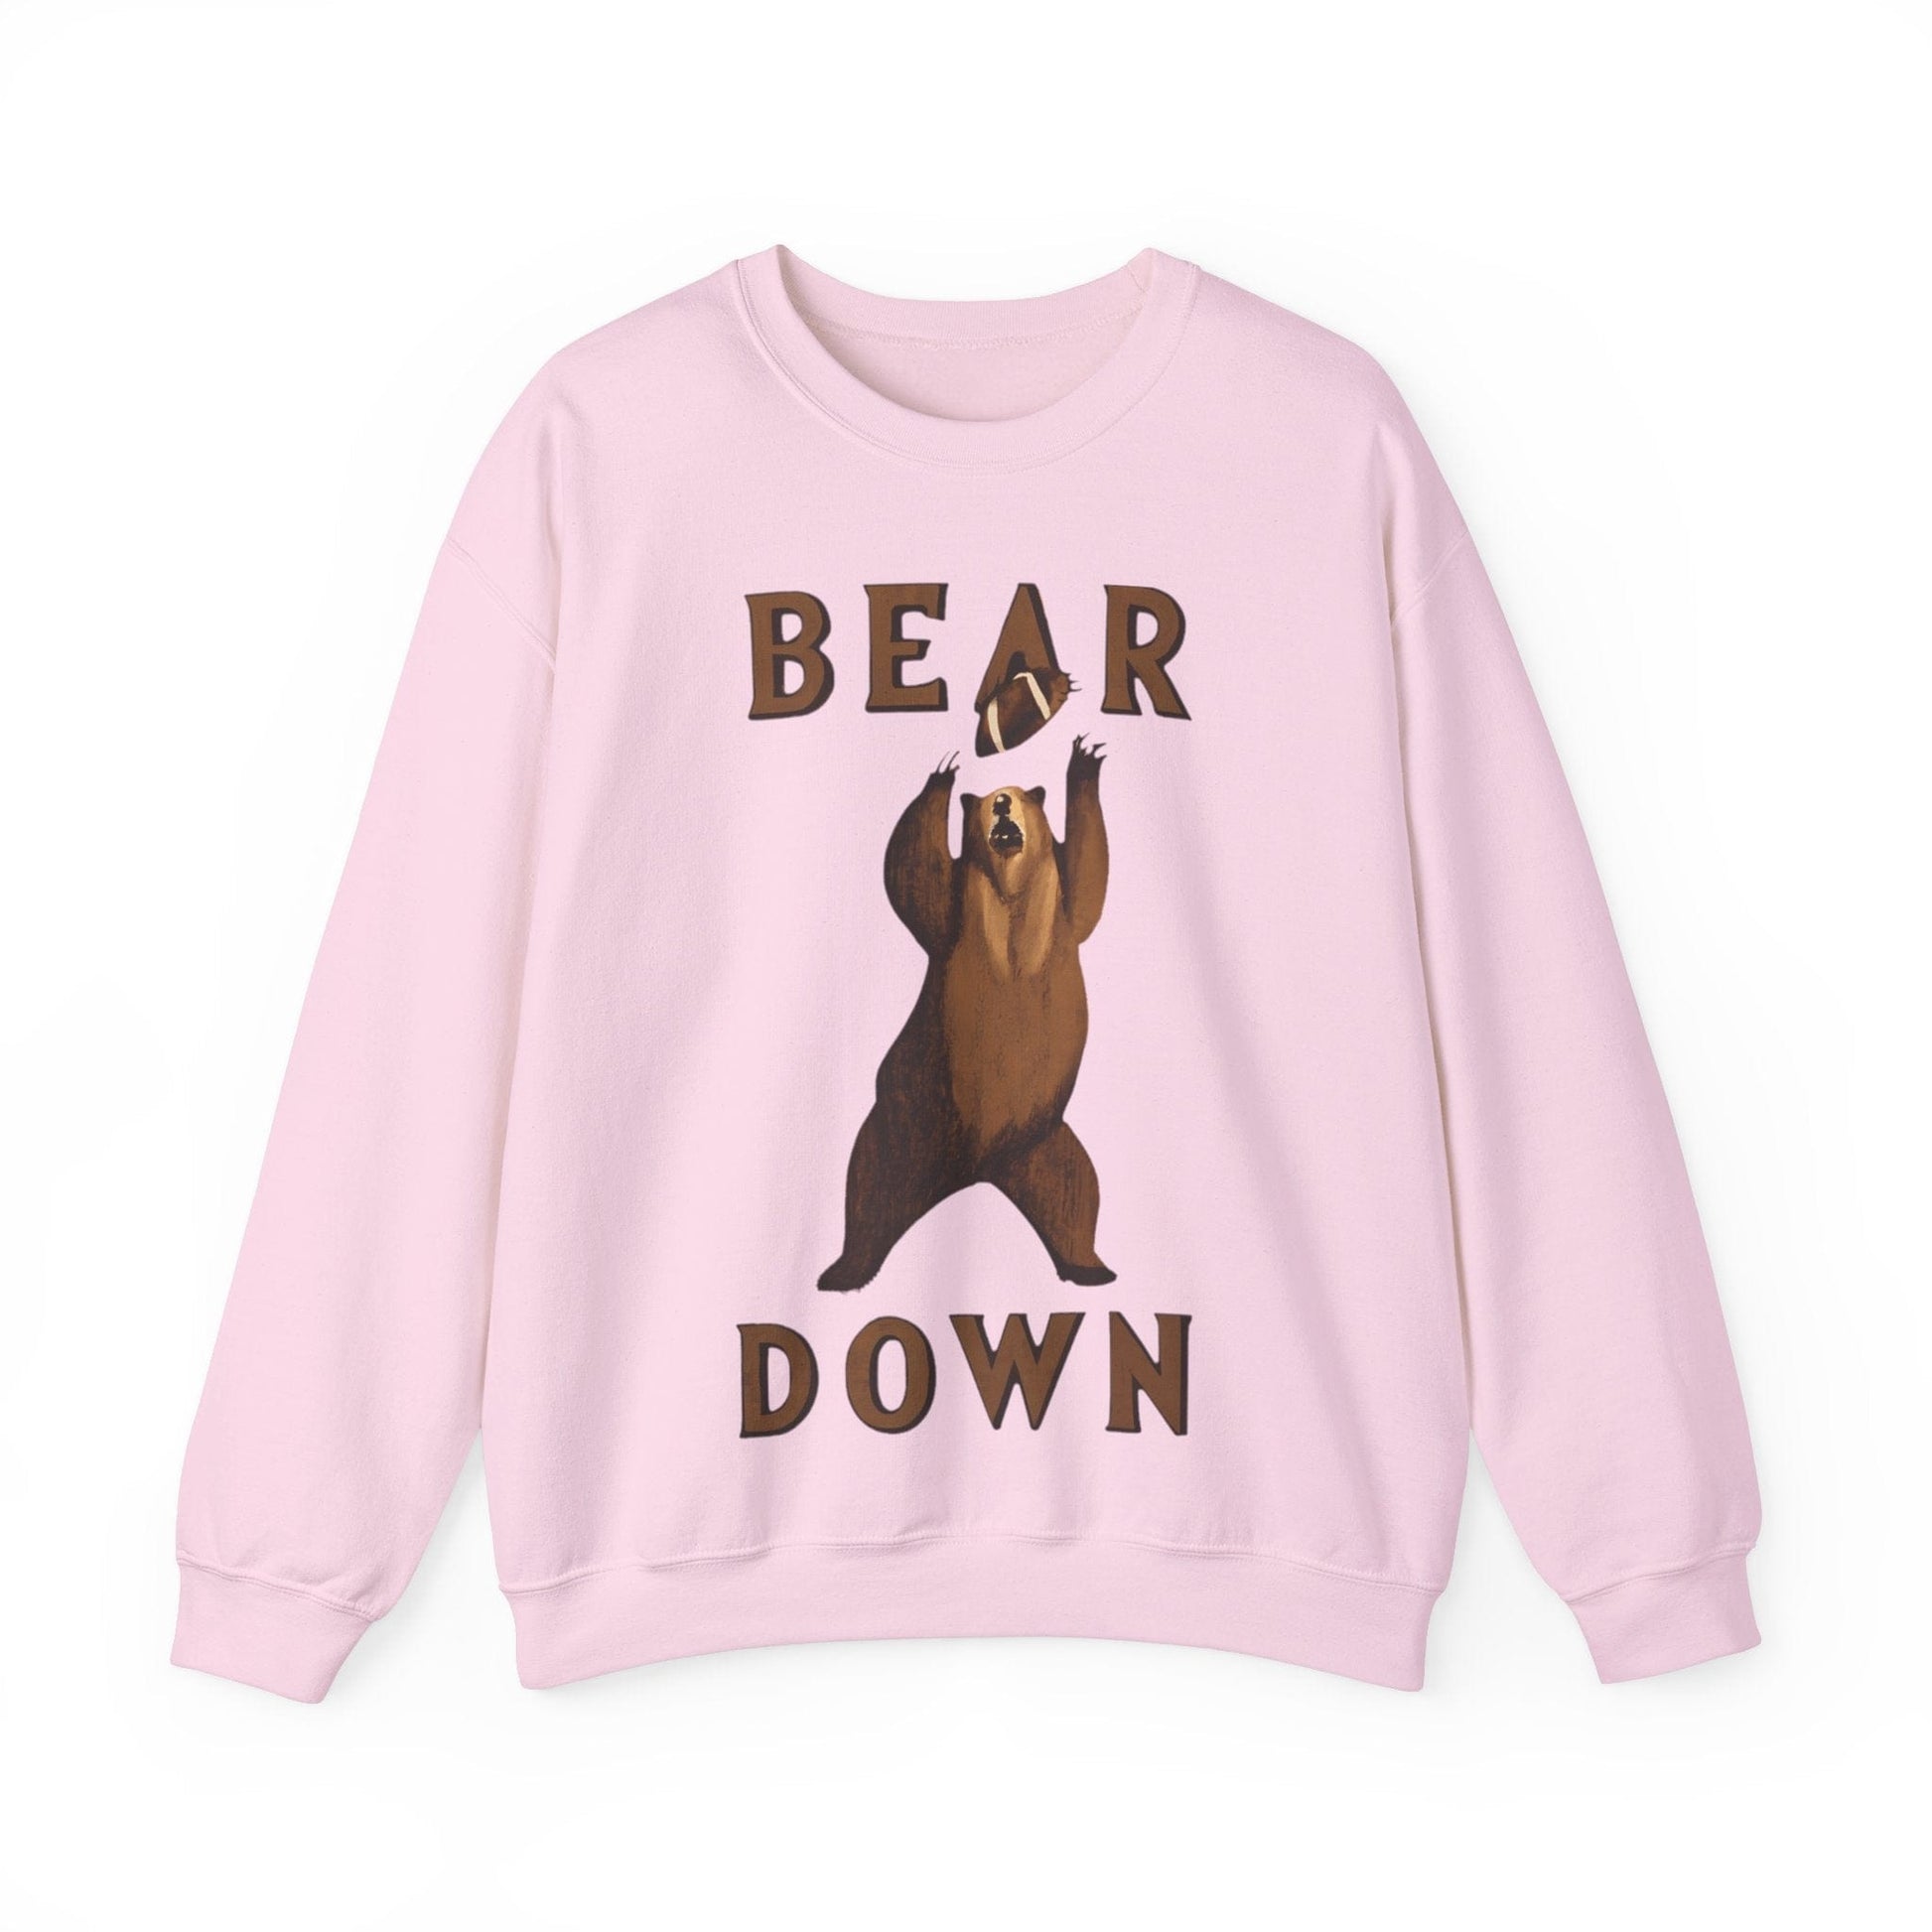 Sweatshirt S / Light Pink Bear Down Vintage Sweatshirt